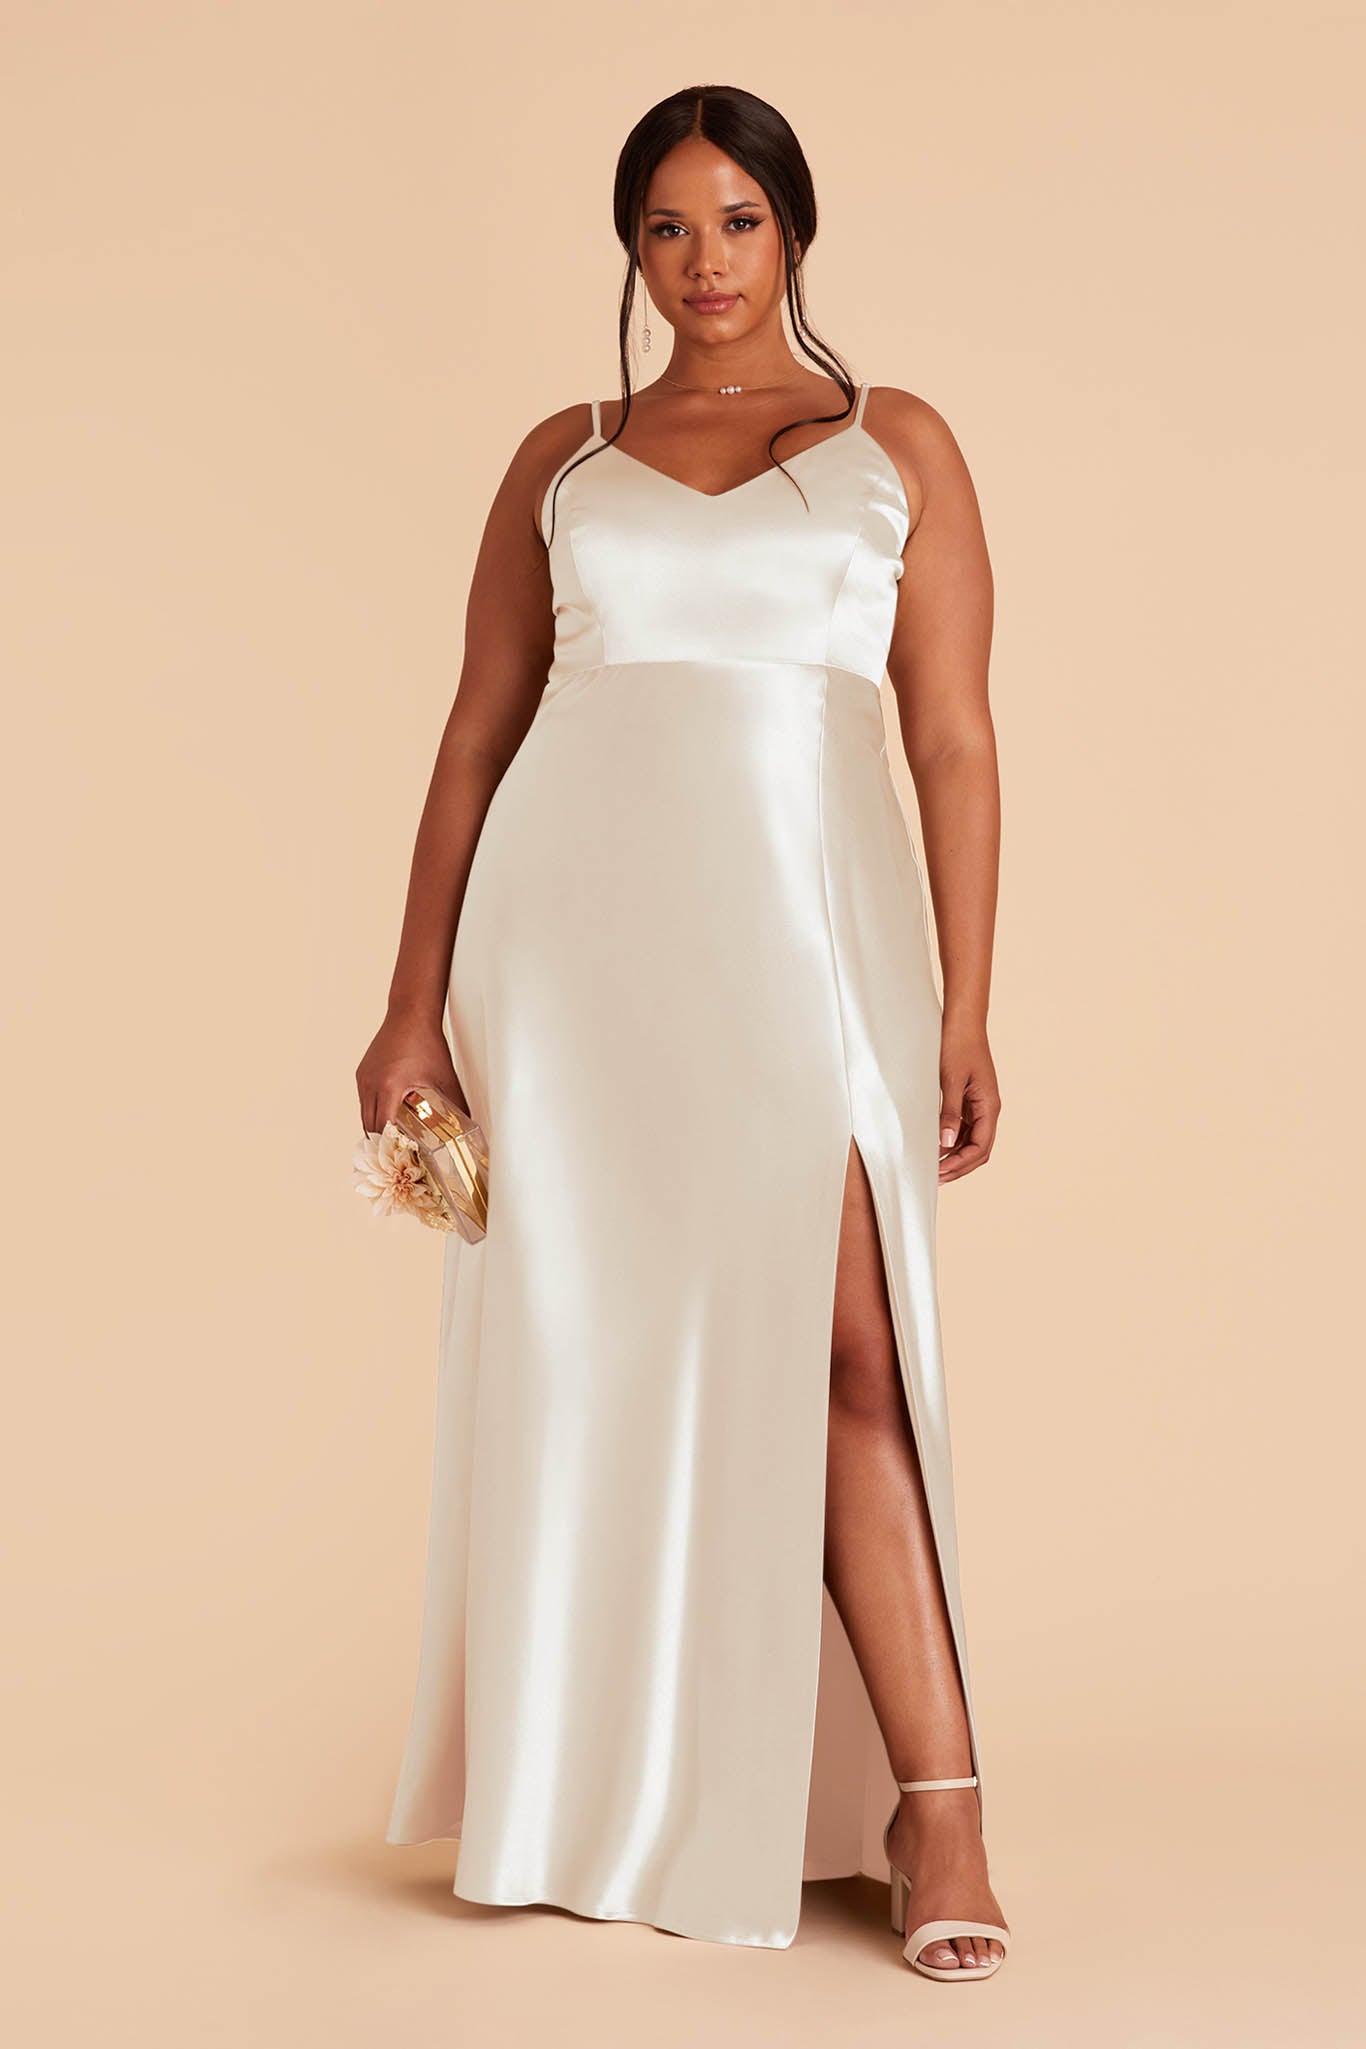 Jay Satin Dress - White